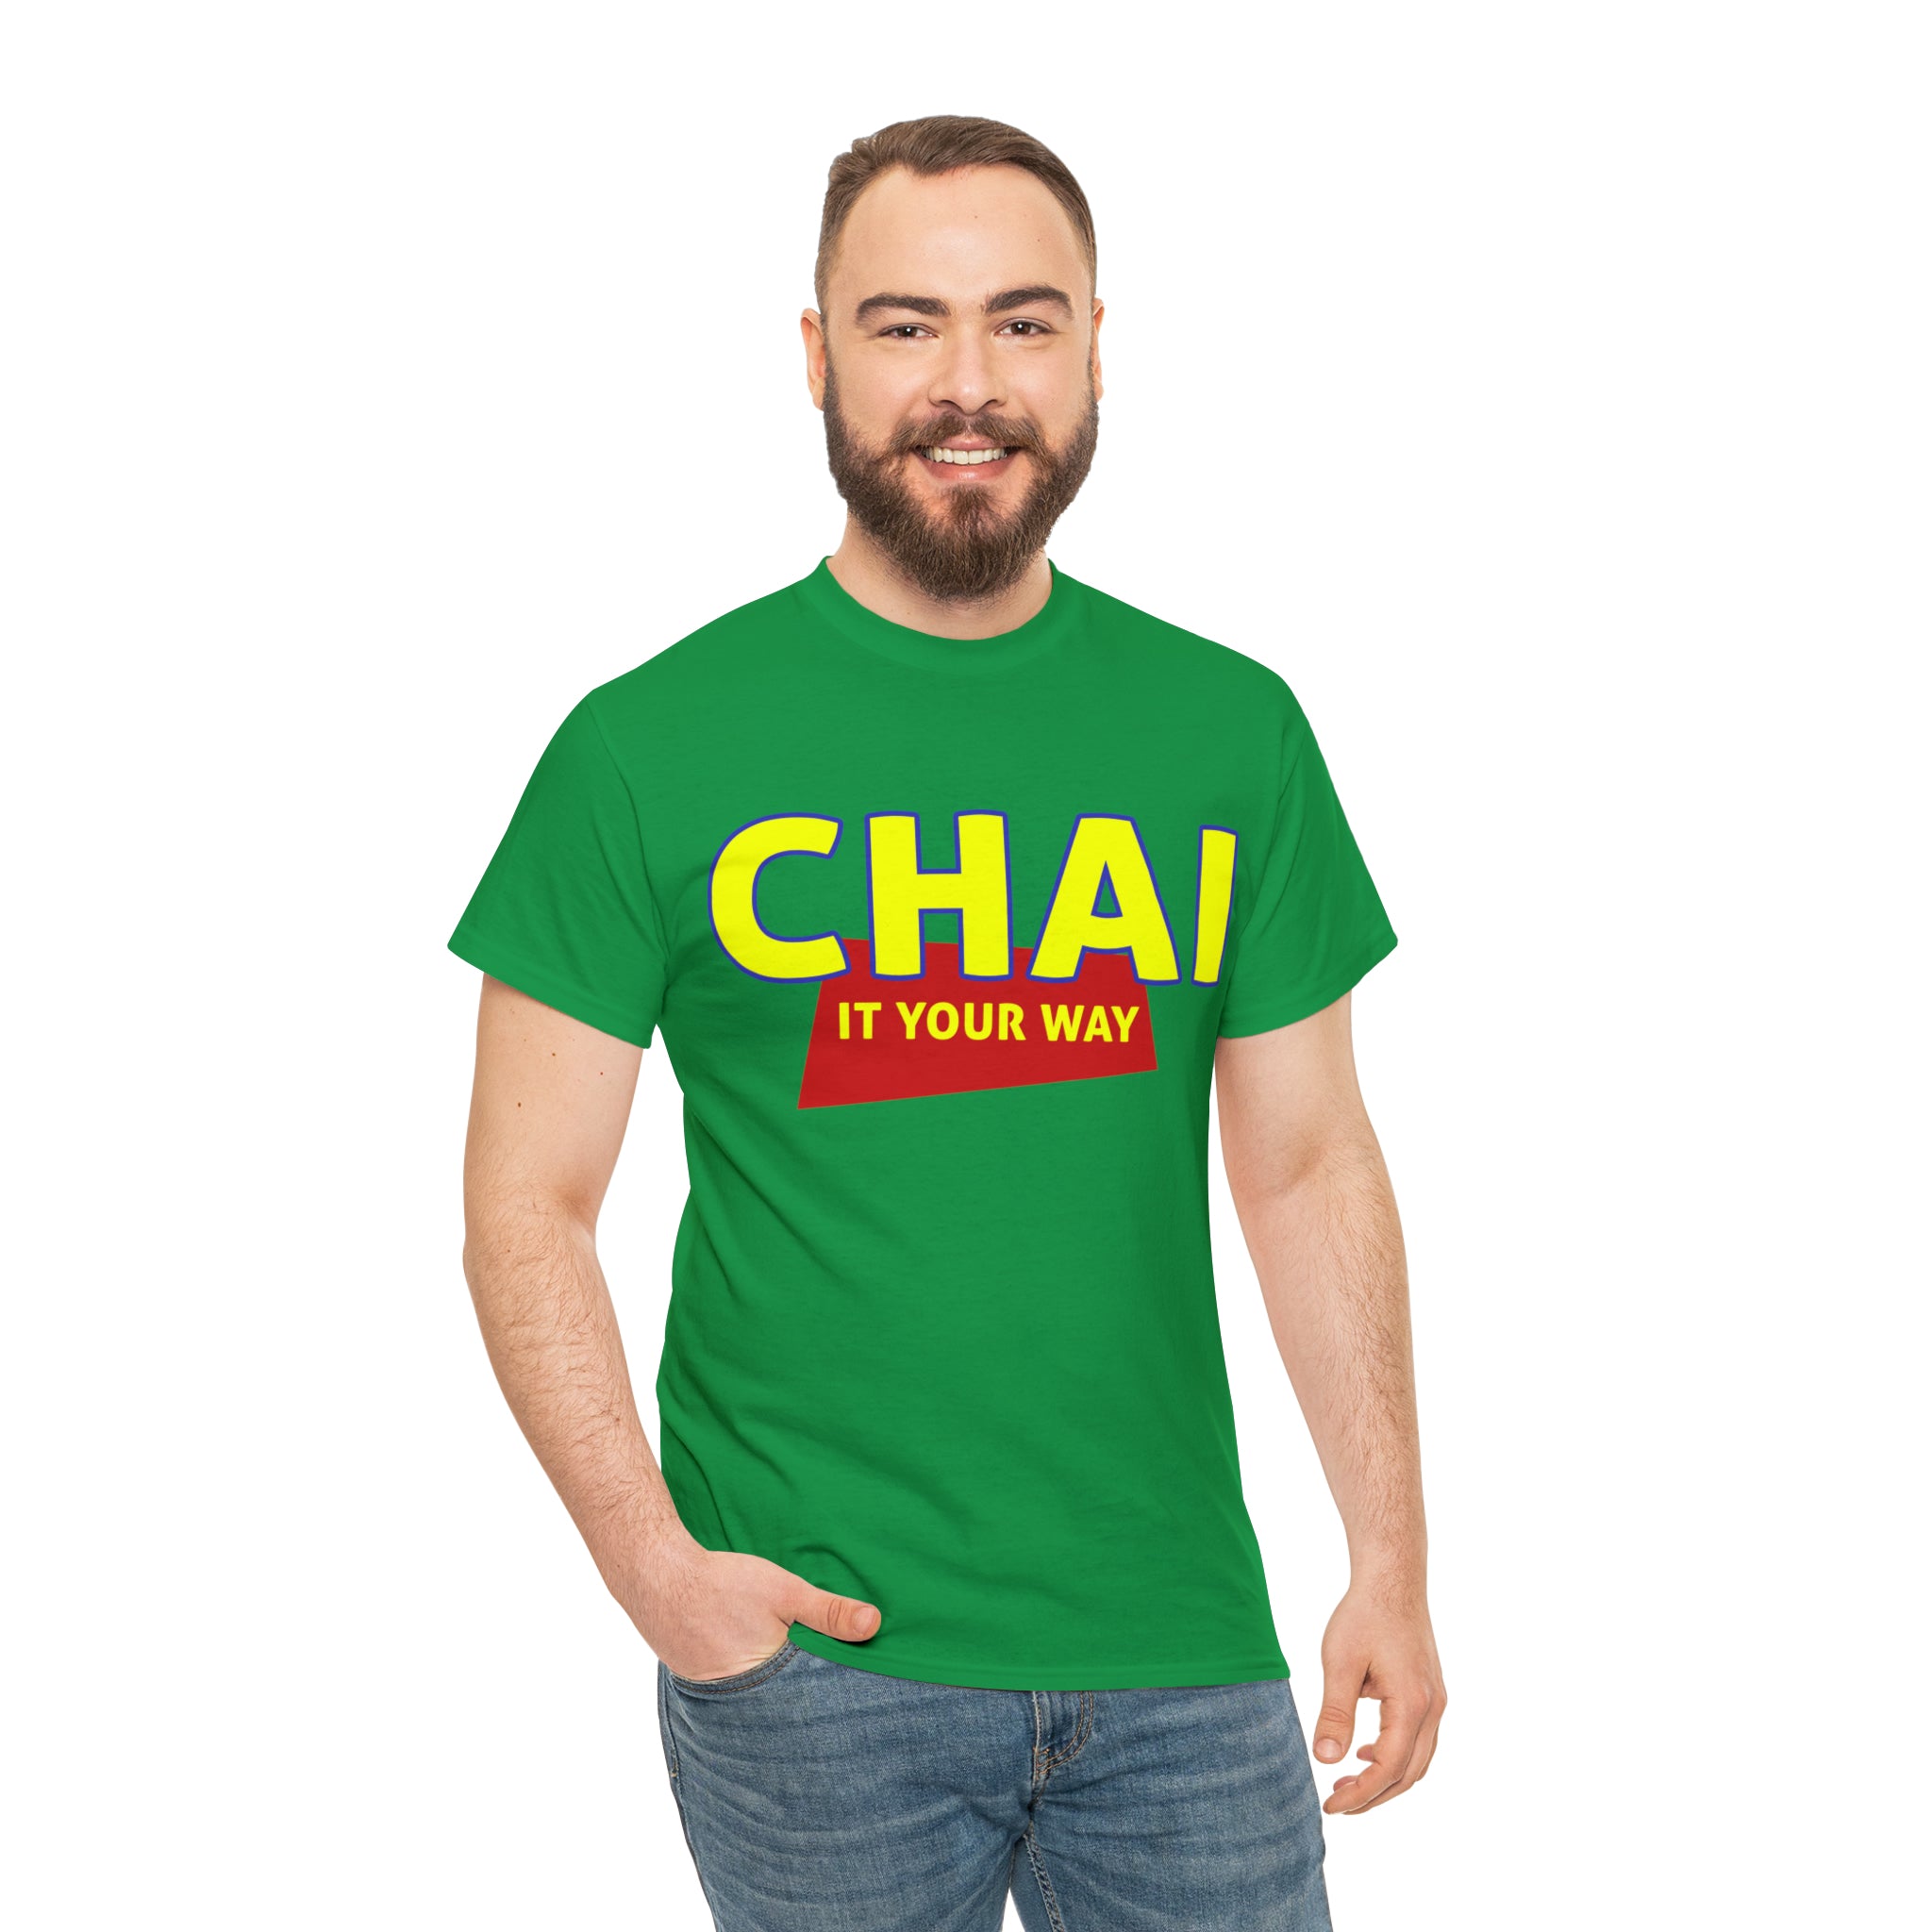 Chai It Your Way T-Shirt Design by C&C